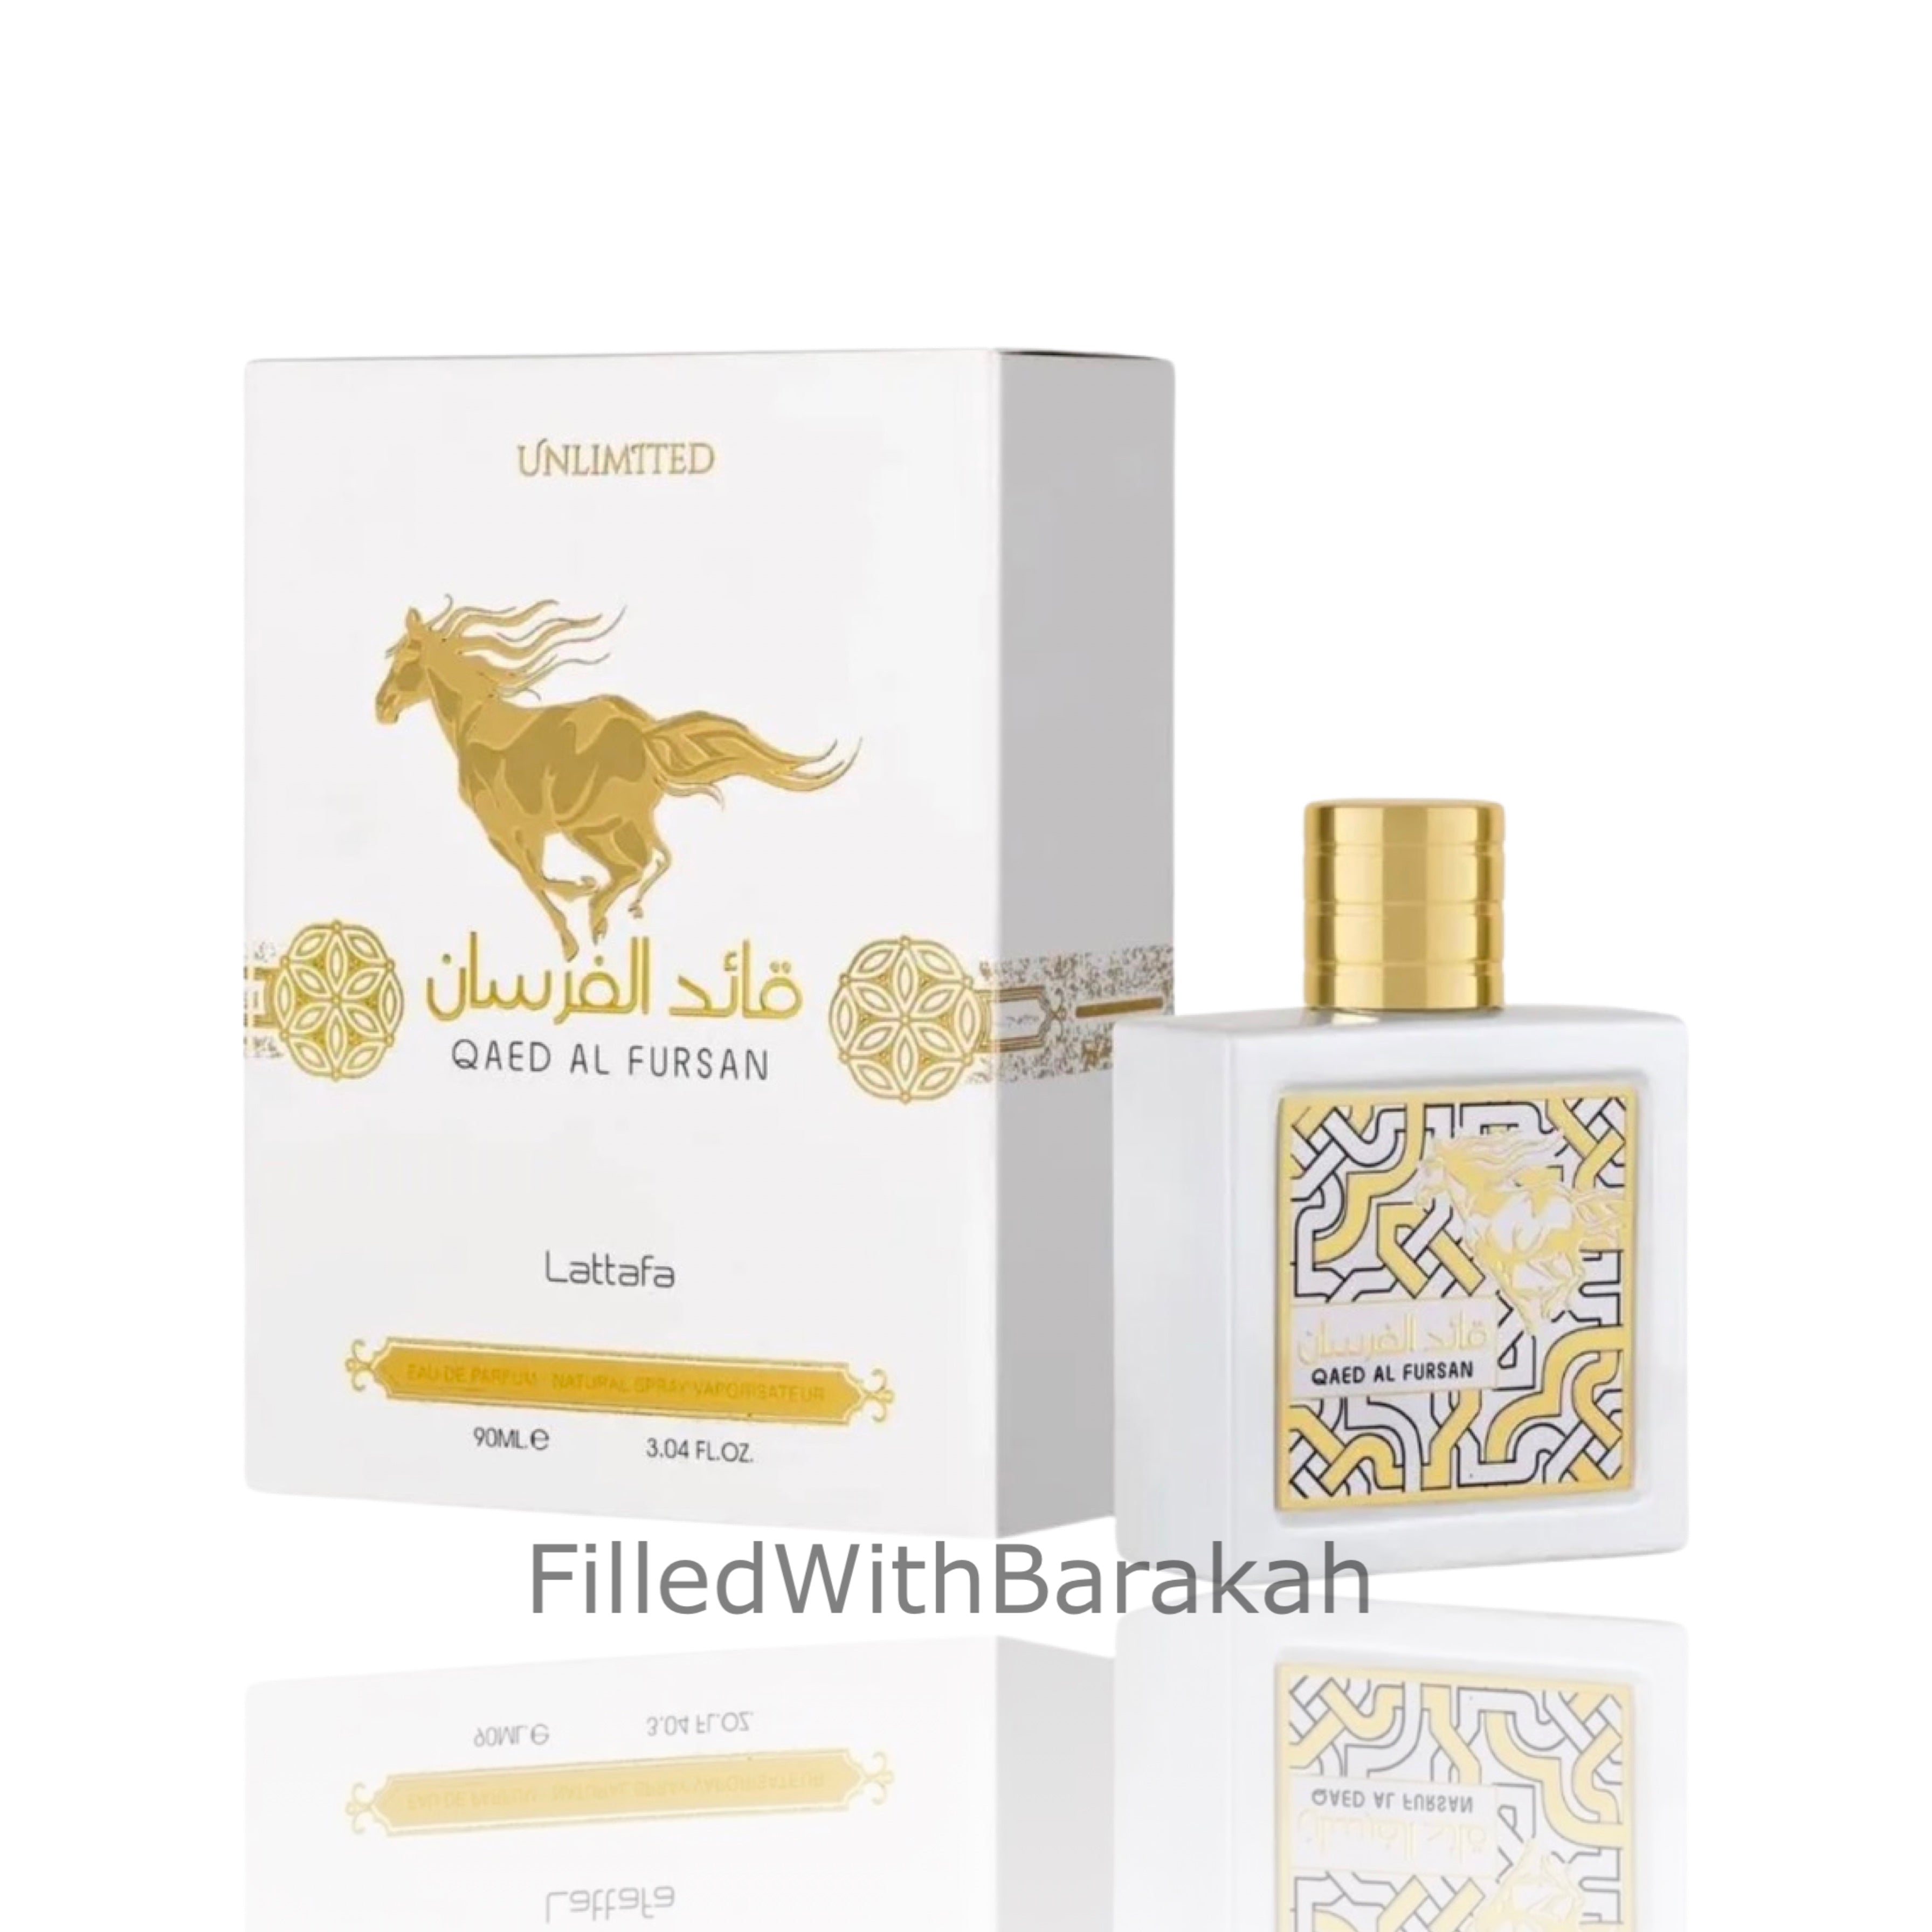 Qaed Al Fursan Unlimited | Eau De Parfum 90ml | by Lattafa